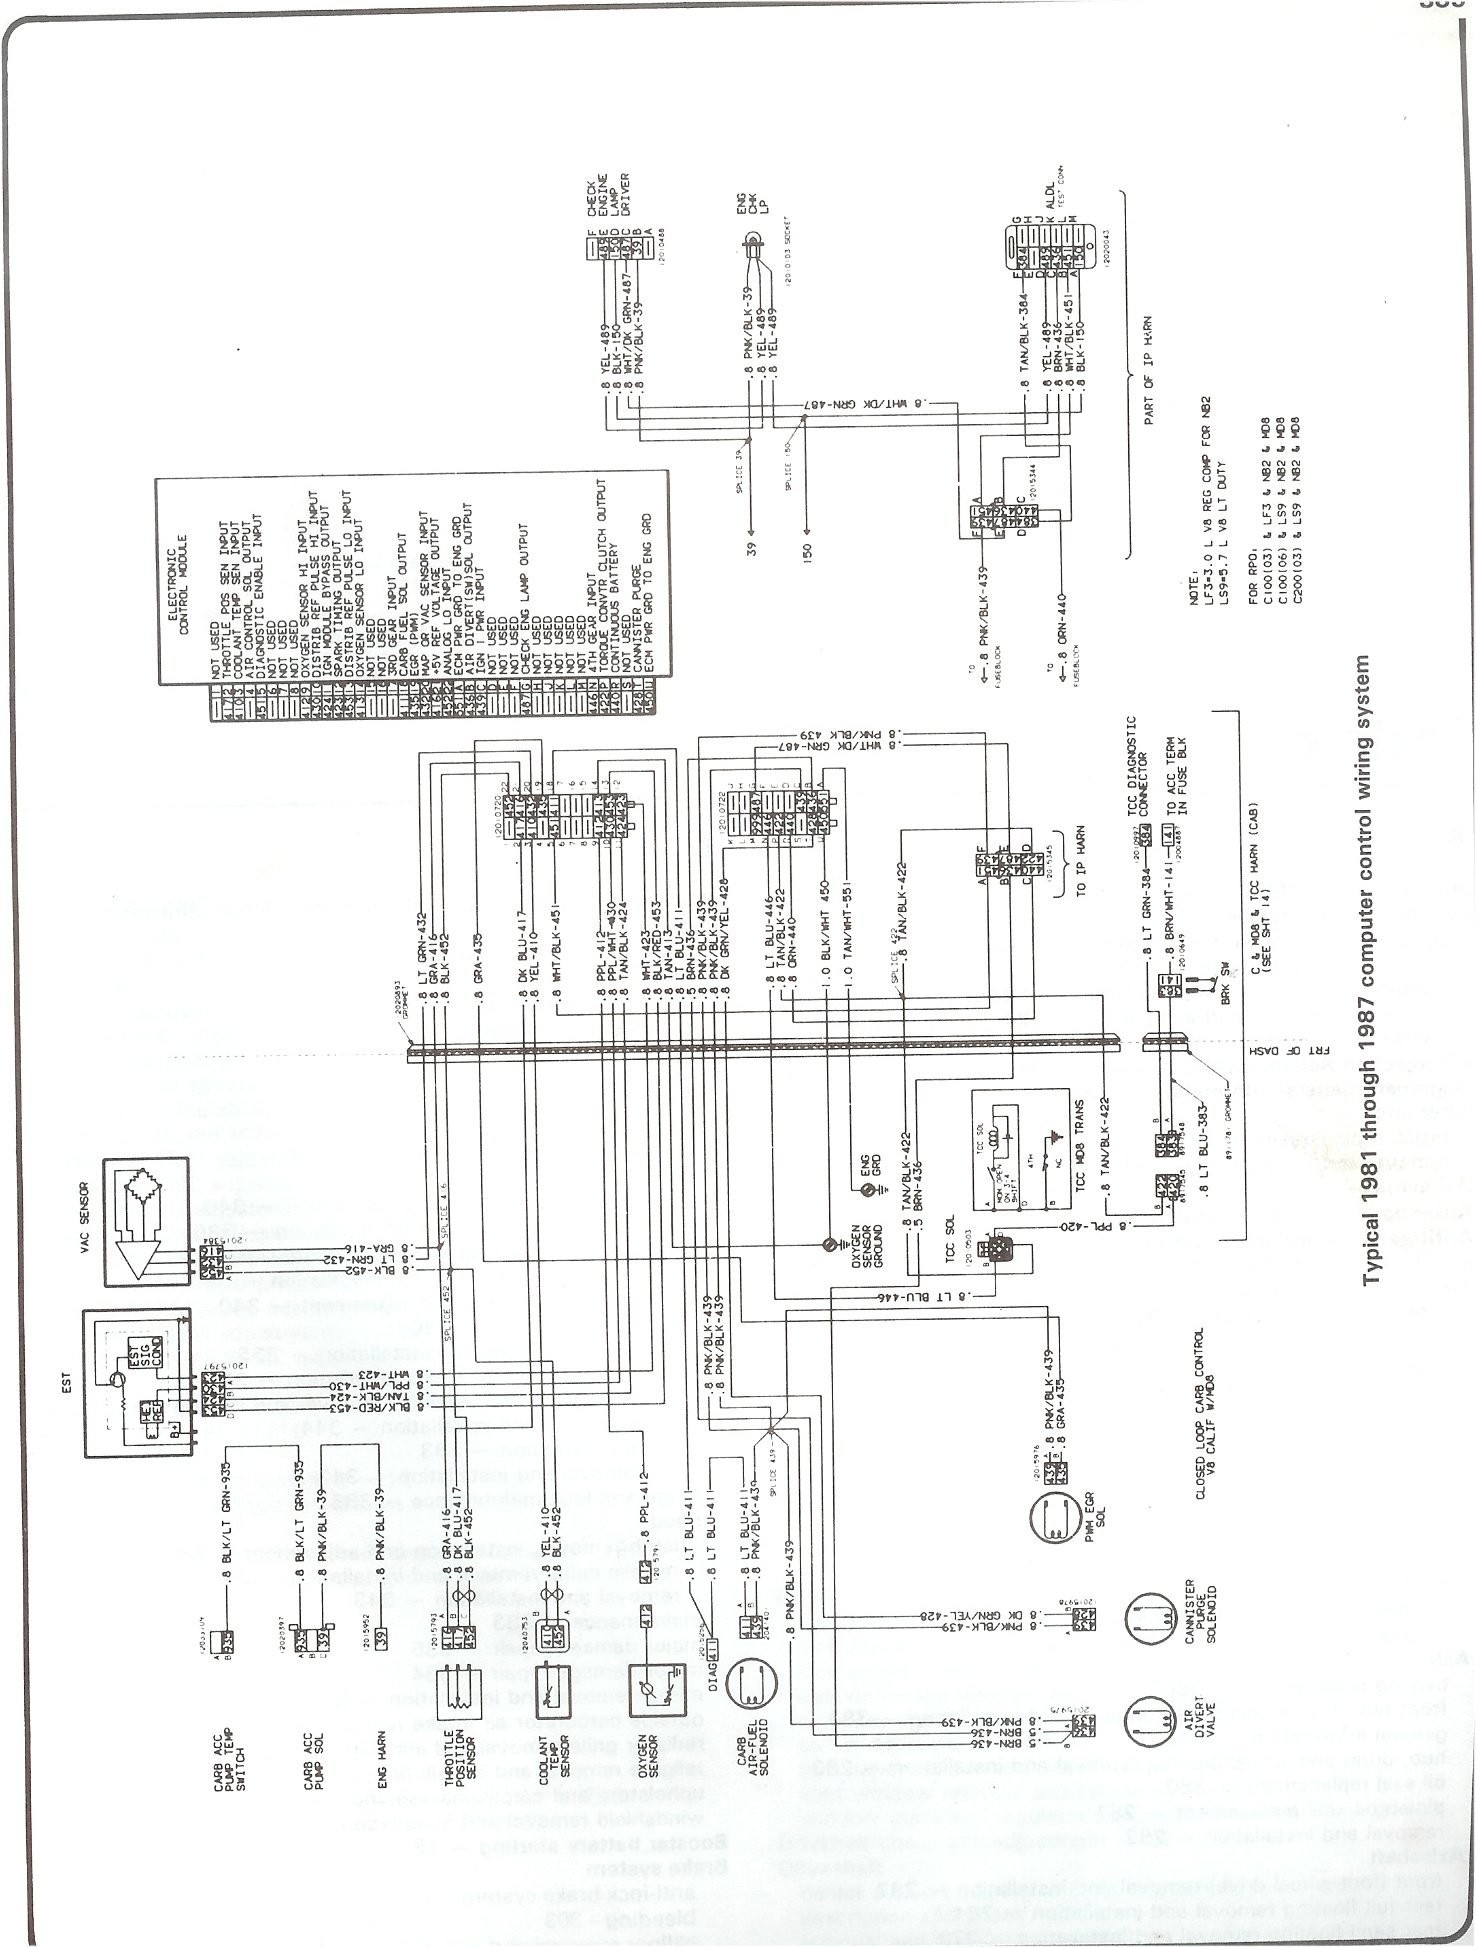 2004 chevy silverado instrument cluster wiring diagram plete 73 87 diagrams rh forum 87chevytrucks 1966 wire harness a 1998 gauge